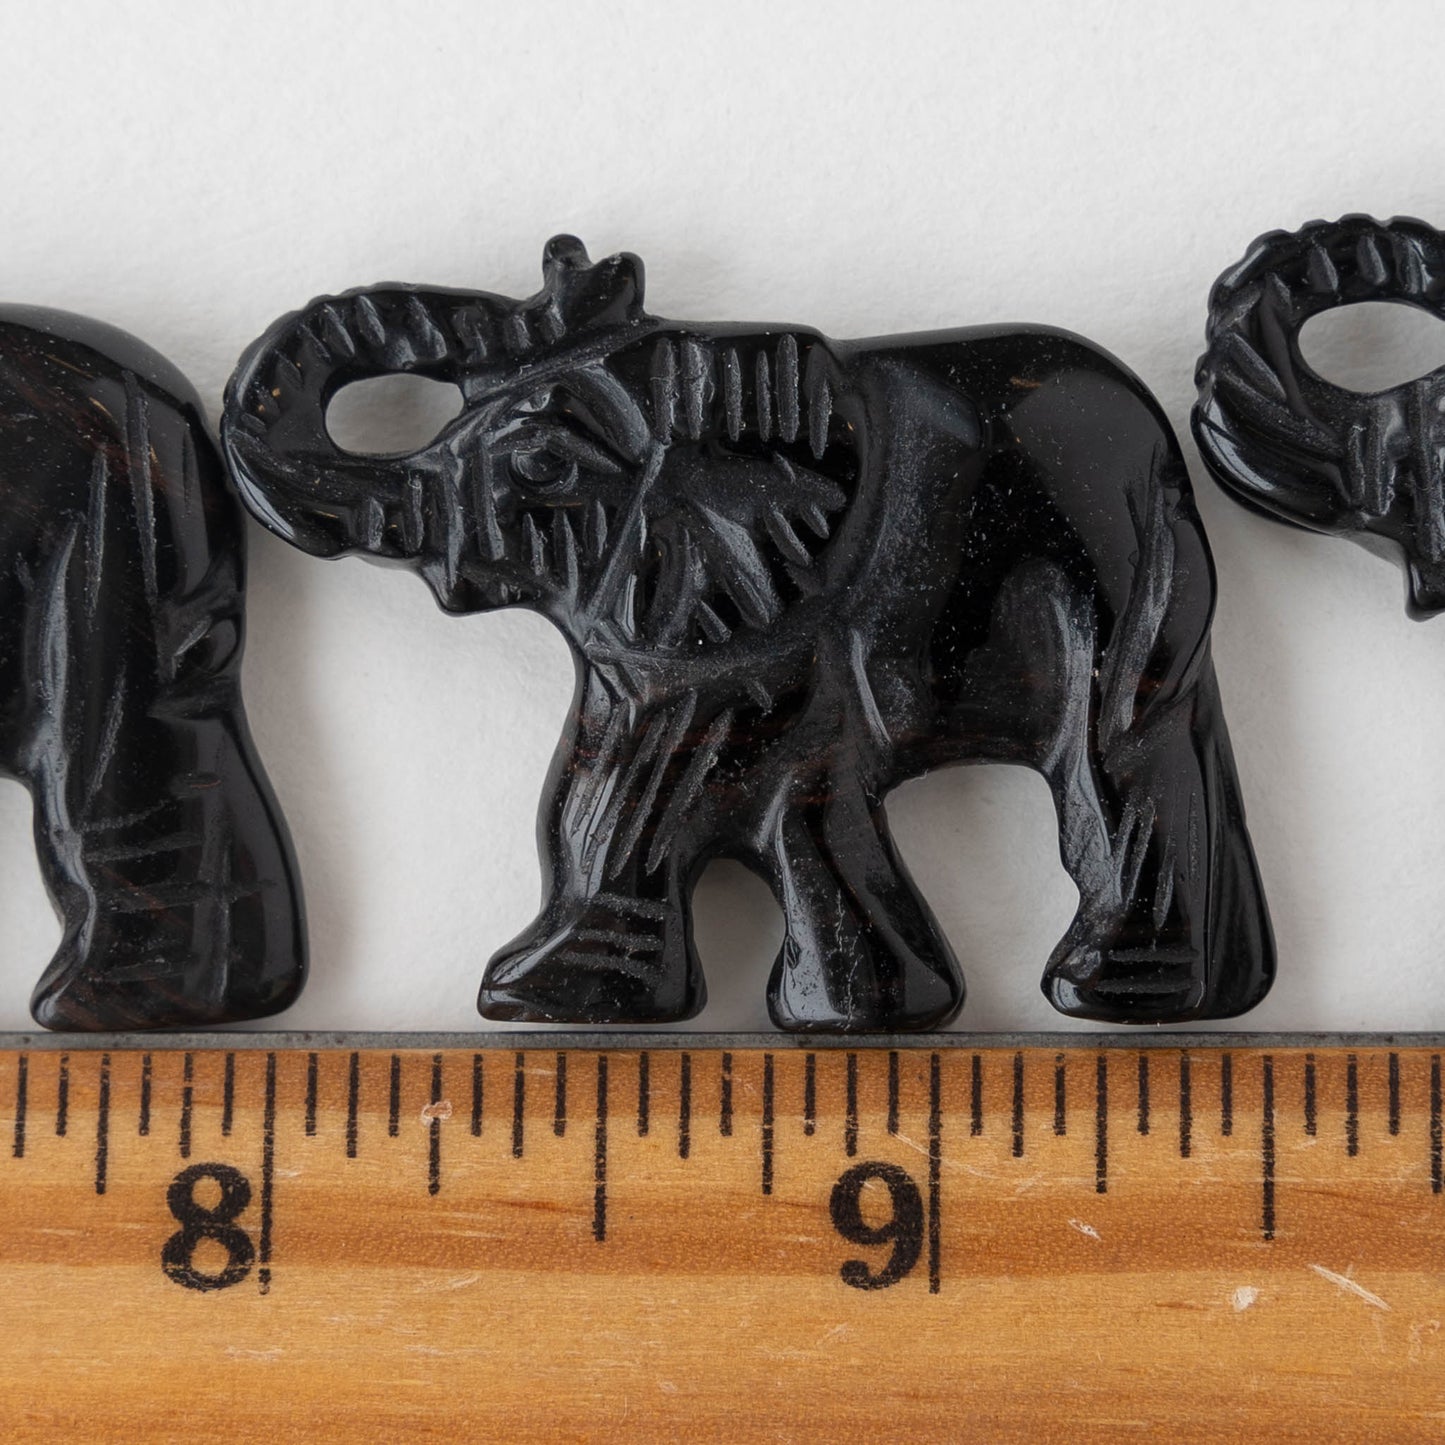 Carved Elephant Bead - Black Obsidian - 1 bead